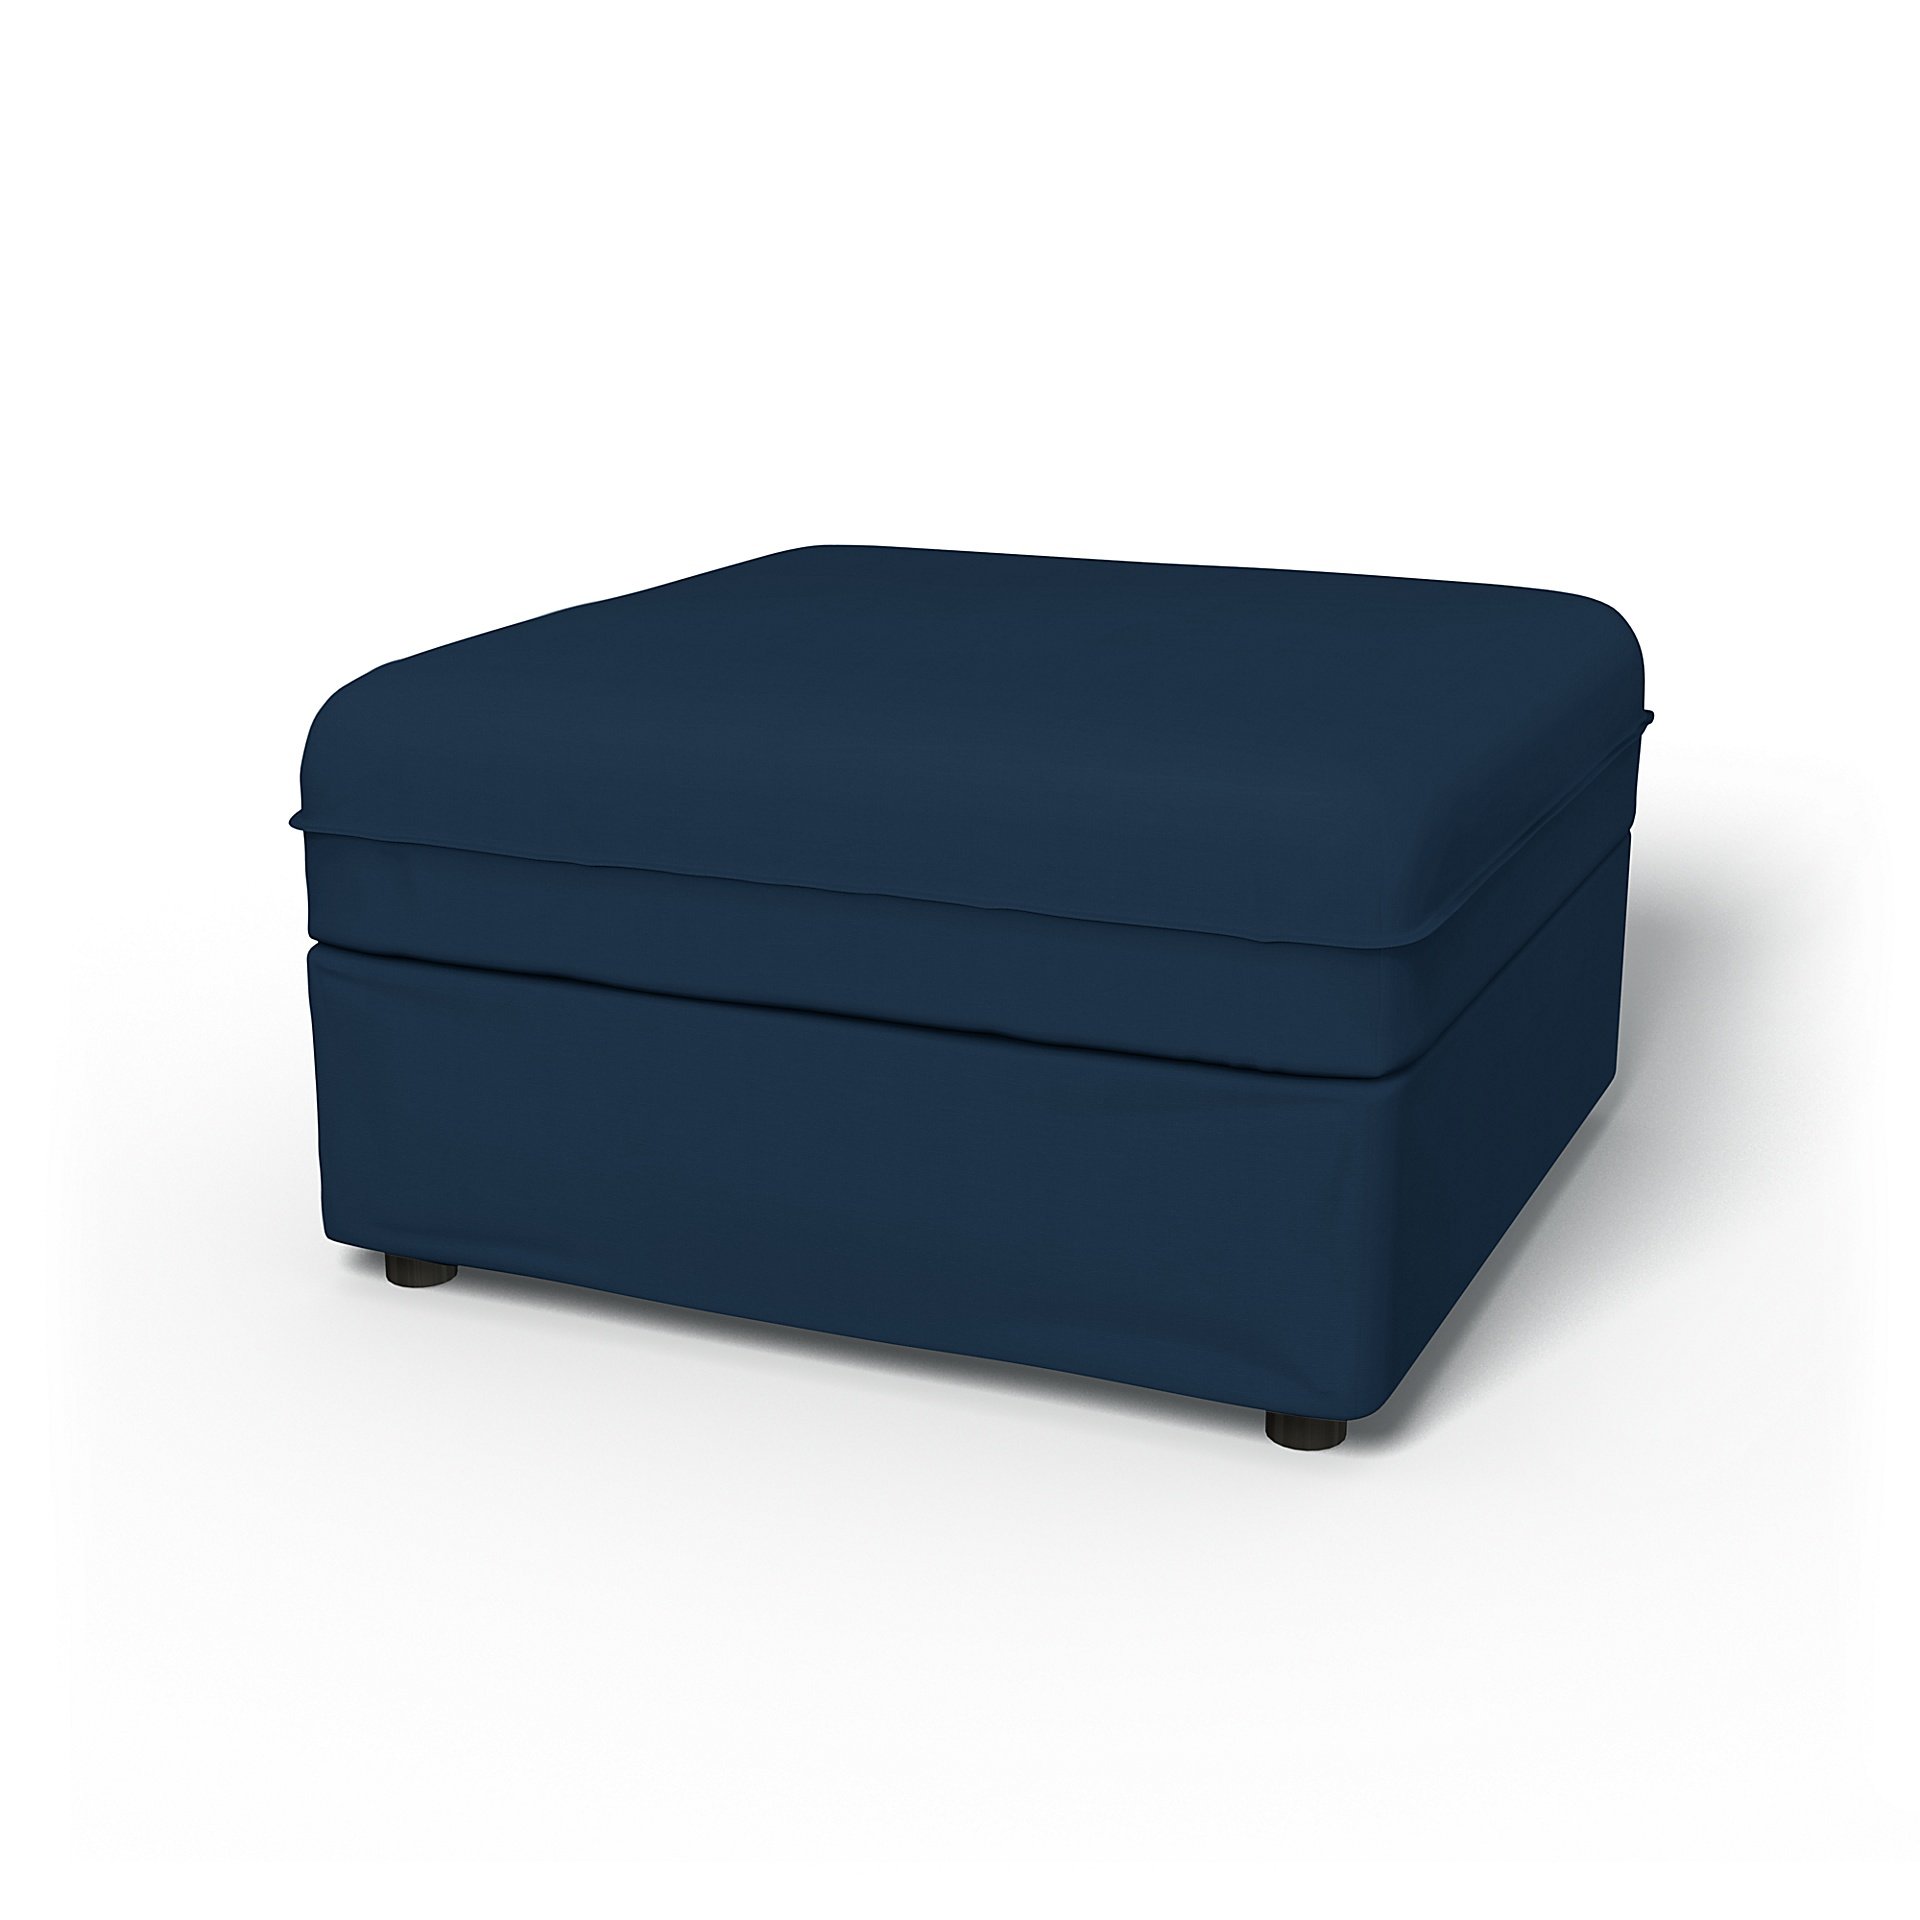 IKEA - Vallentuna Seat Module with Storage Cover 80x80cm 32x32in, Deep Navy Blue, Cotton - Bemz